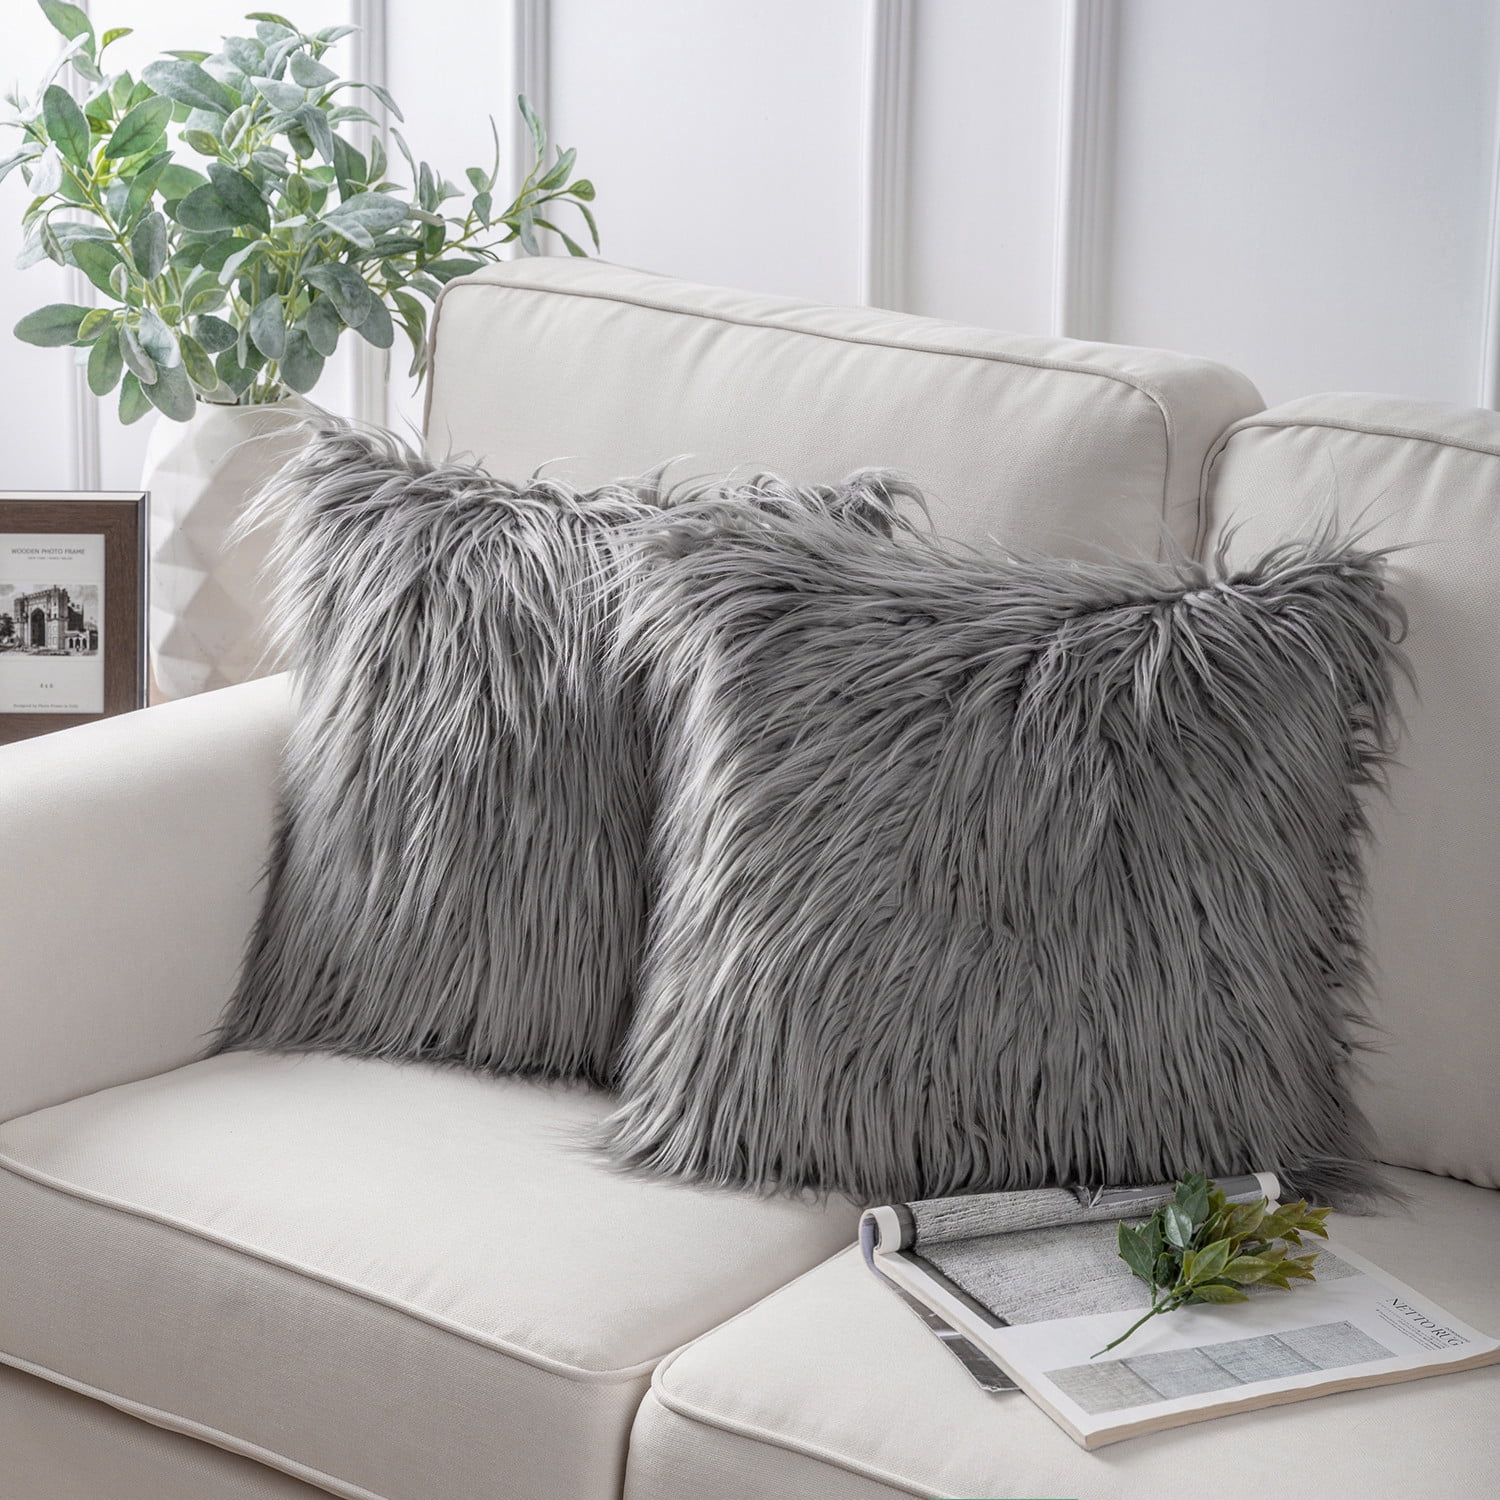 Handmade Biscuit Shape Pillow Throw Sofa Car Office Soft Cushion Home Decor NEW 